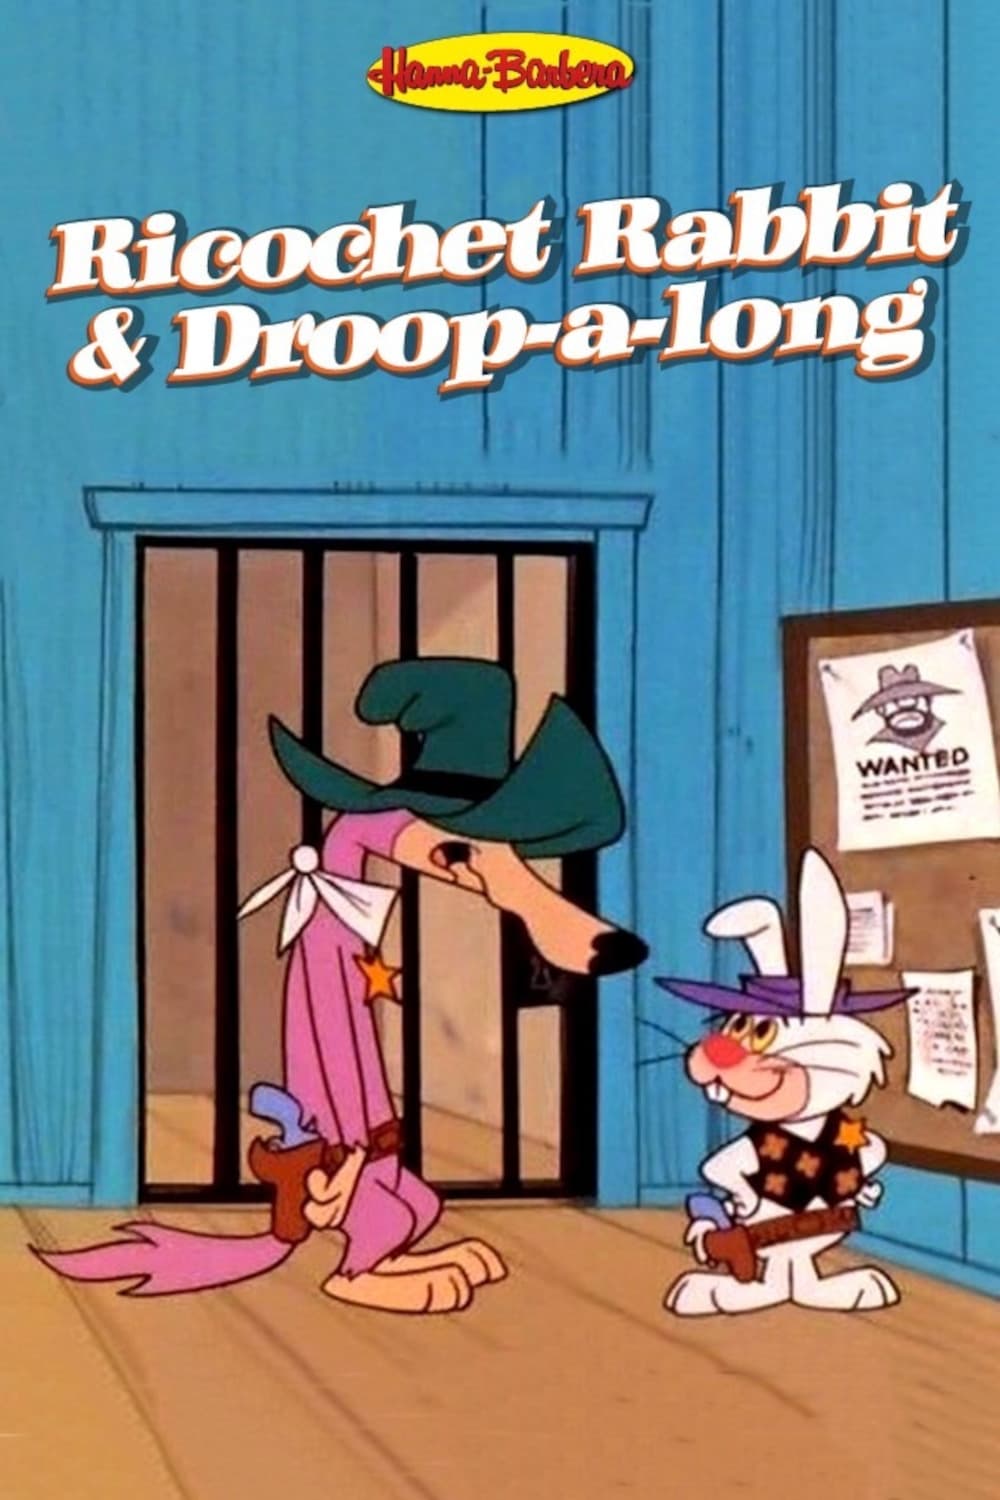 Ricochet Rabbit & Droop-a-Long (1964)